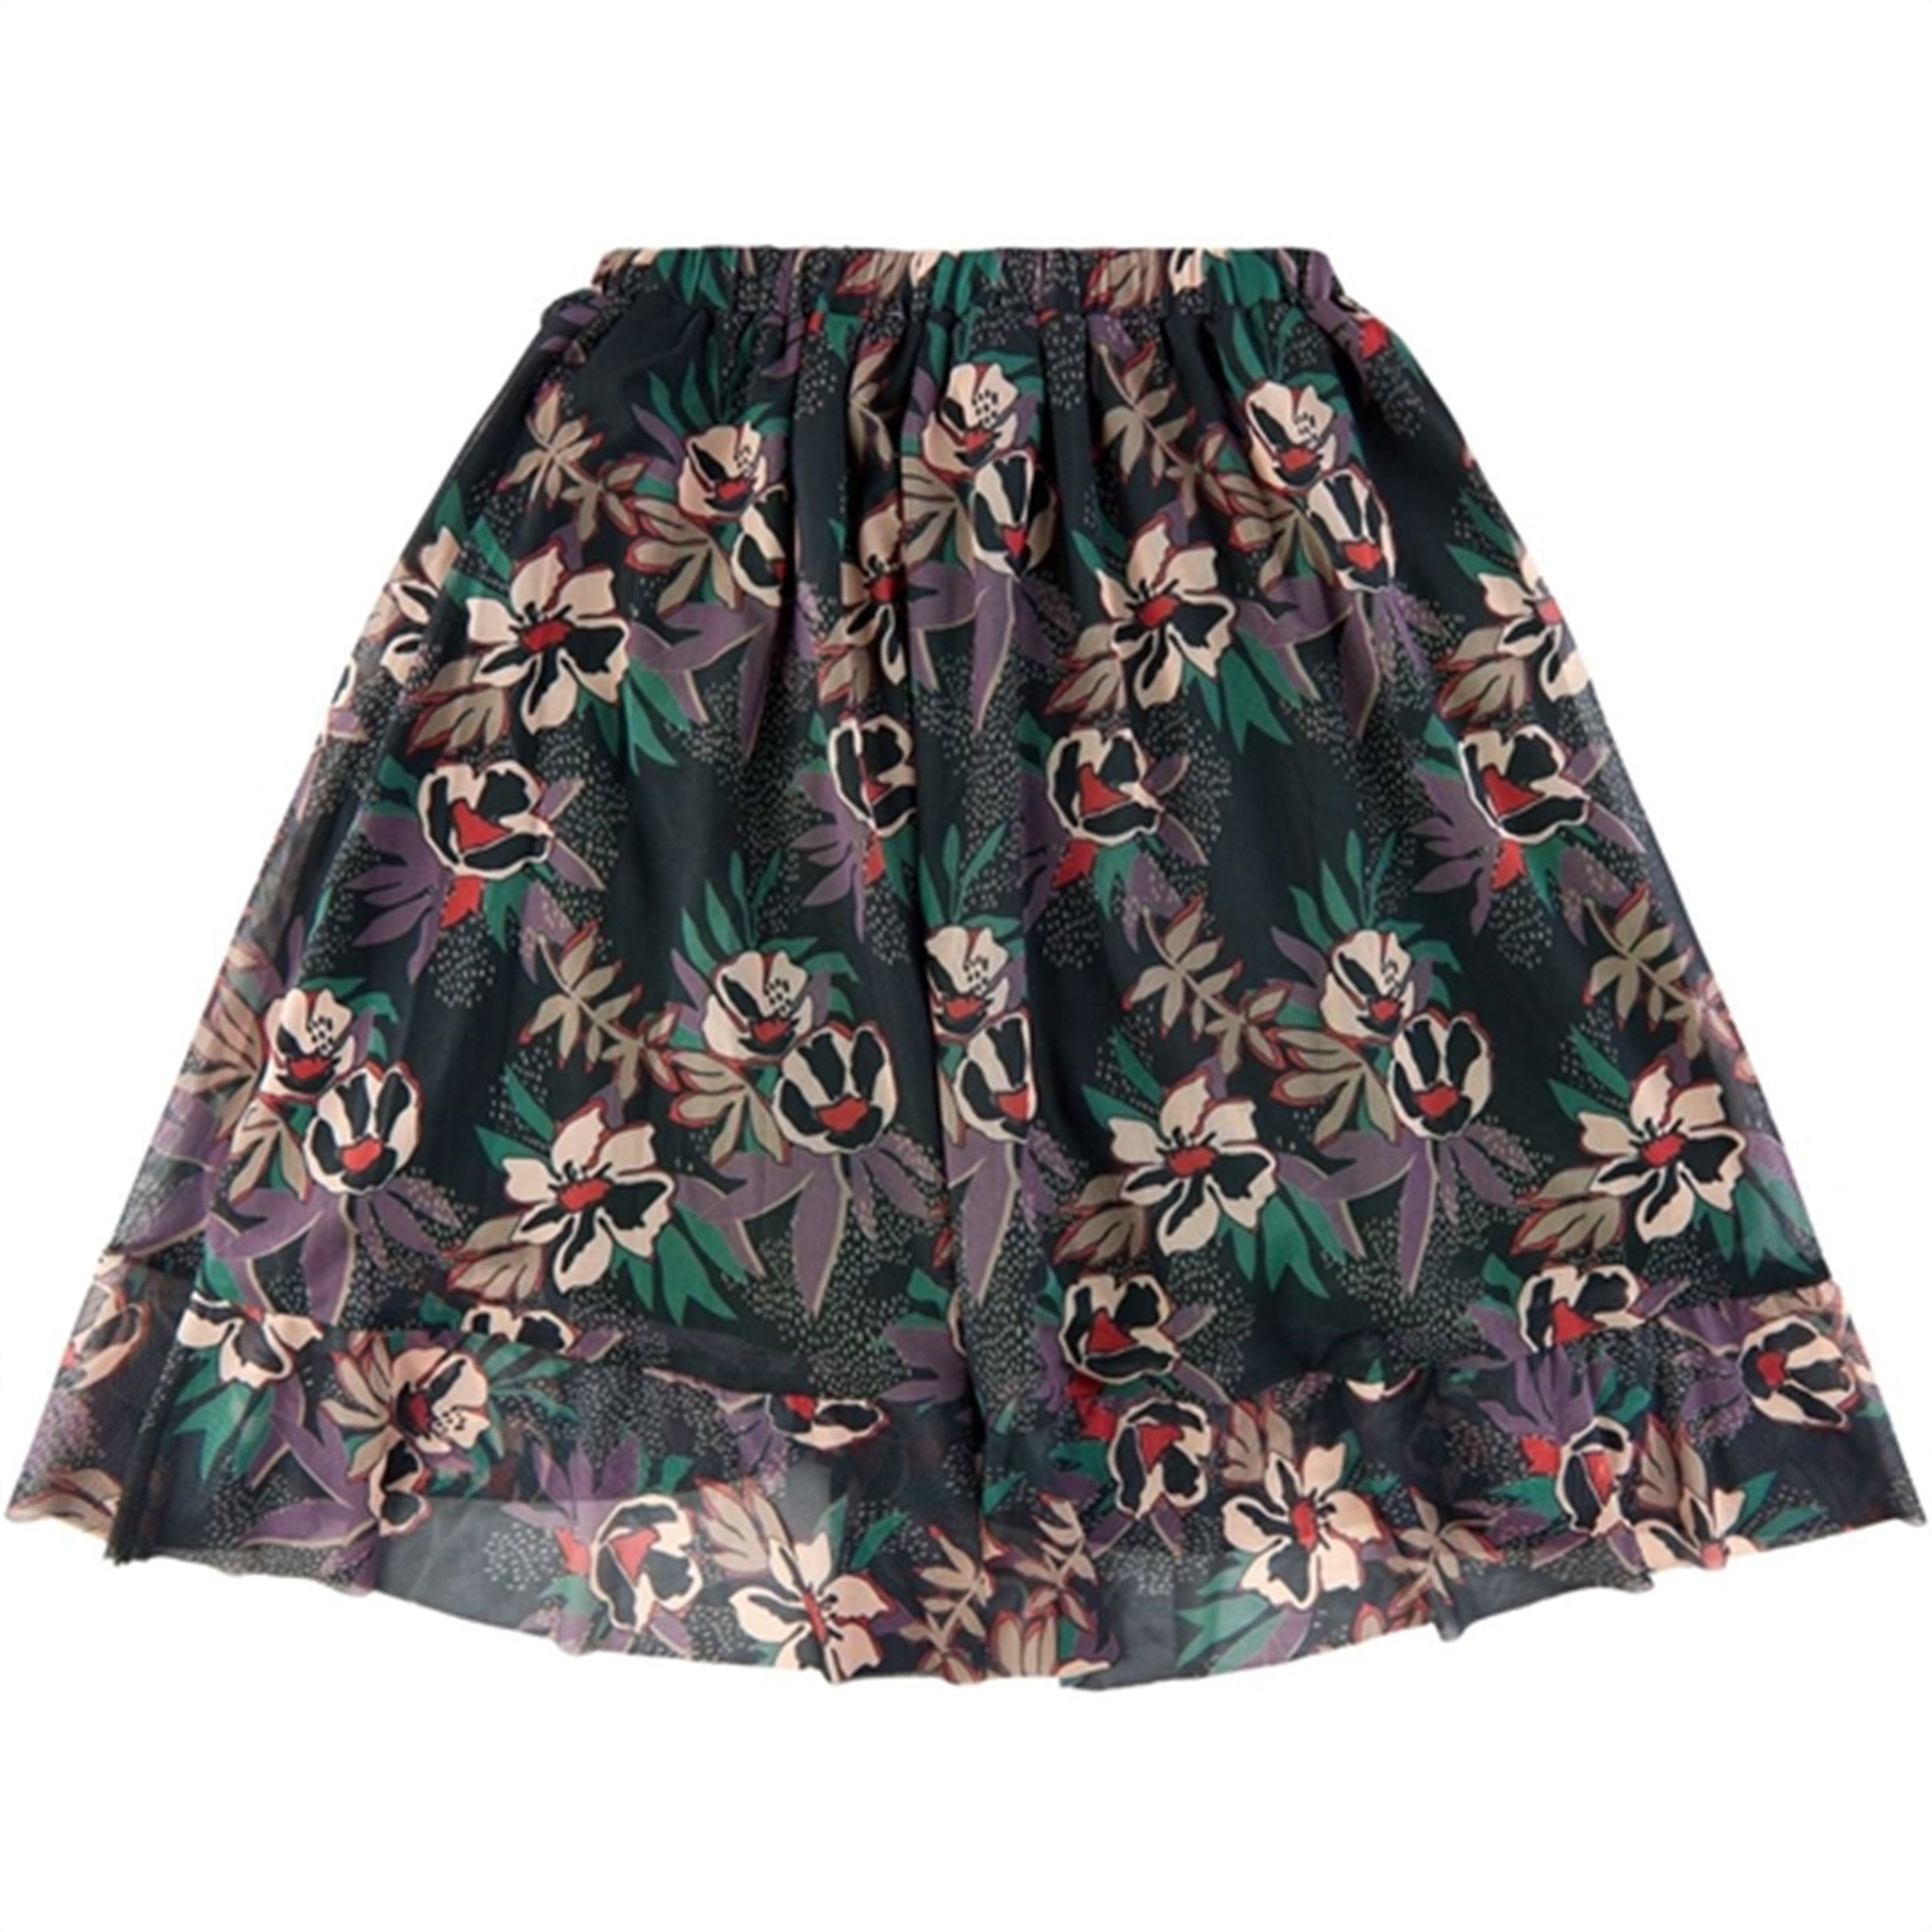 The New Aop Floral Enna Skirt 2